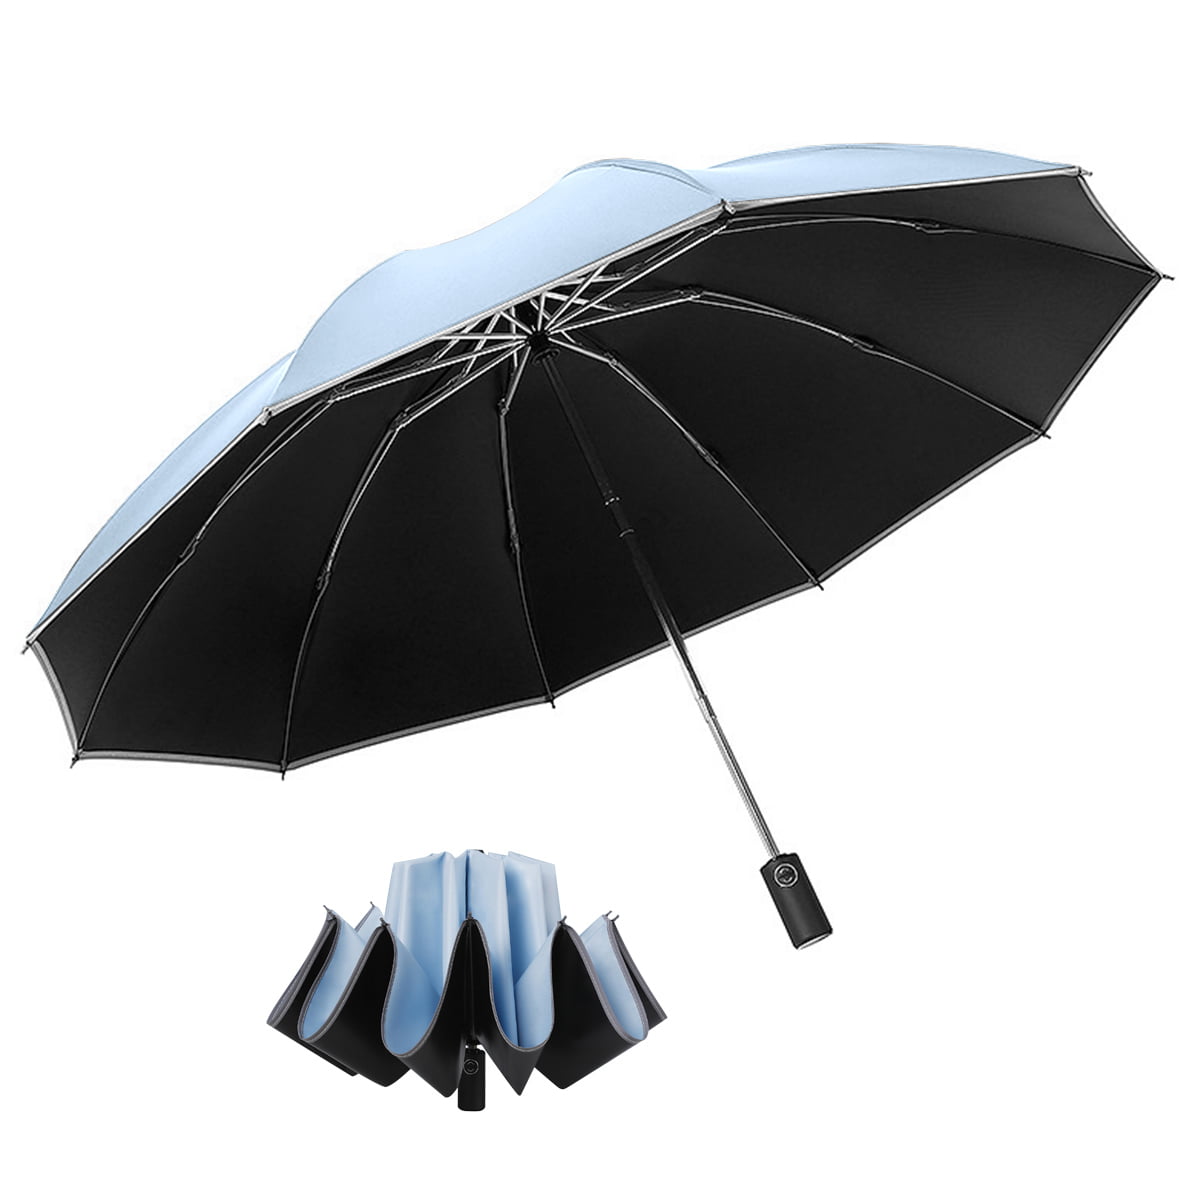 Travel Umbrella Windproof,Auto Open Close Lightweight Compact Folding Umbrella with Teflon Coating 10 Rib Construction for Men Women 